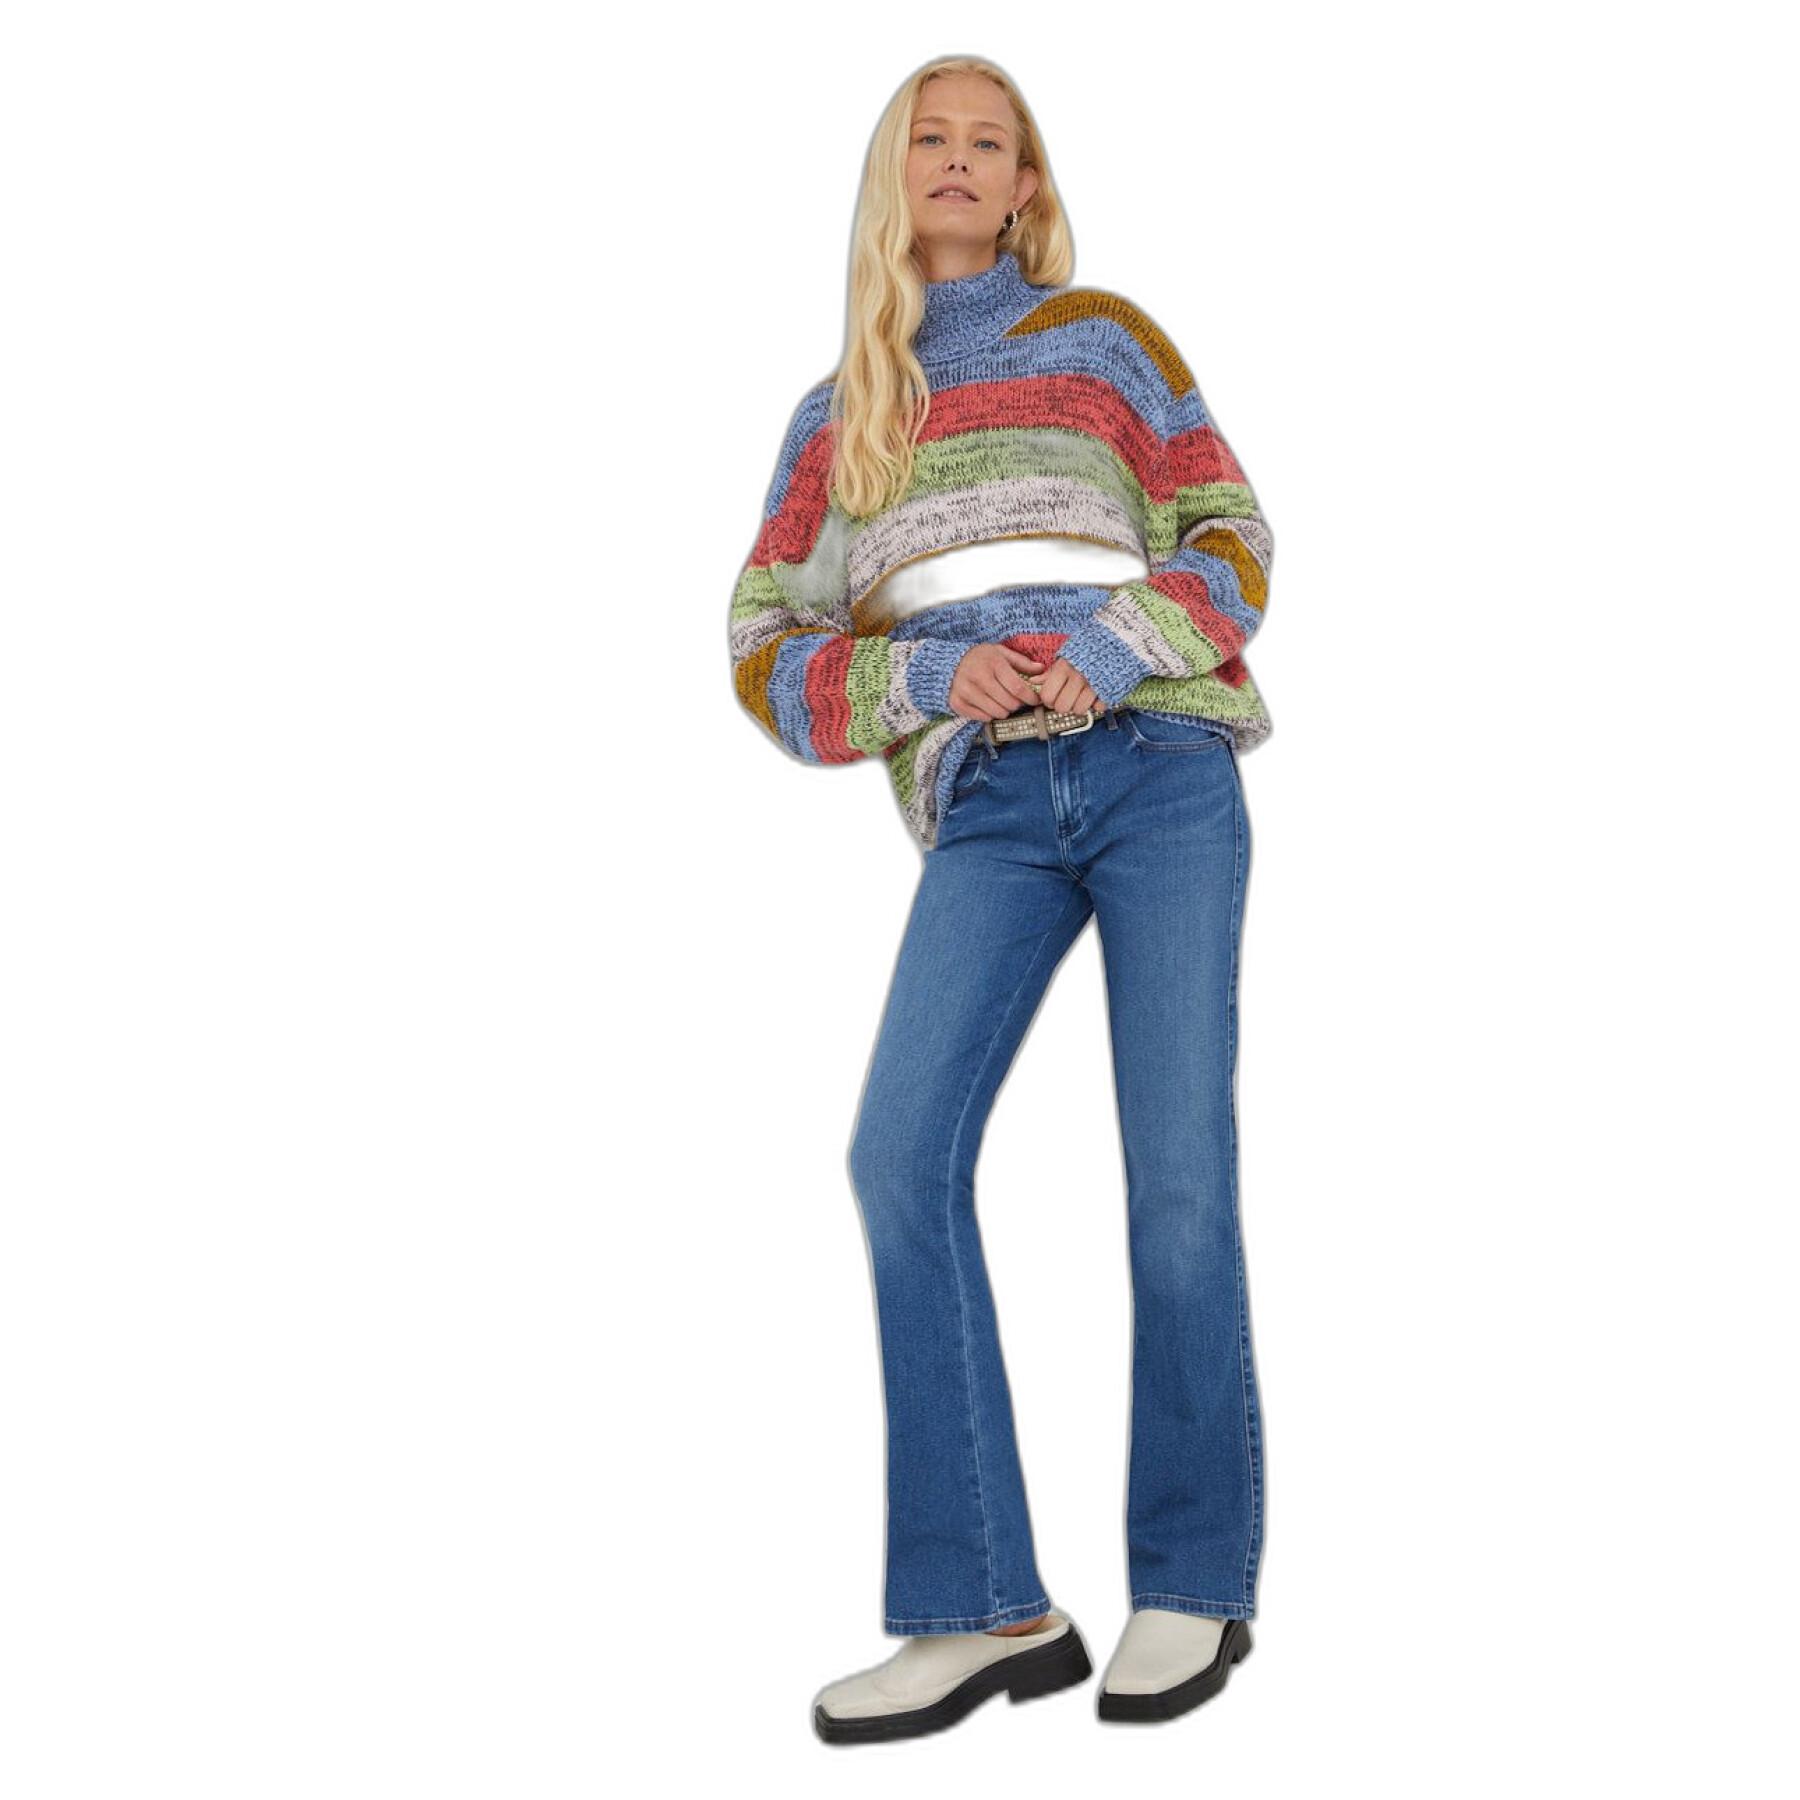 Women's jeans Wrangler Bootcut